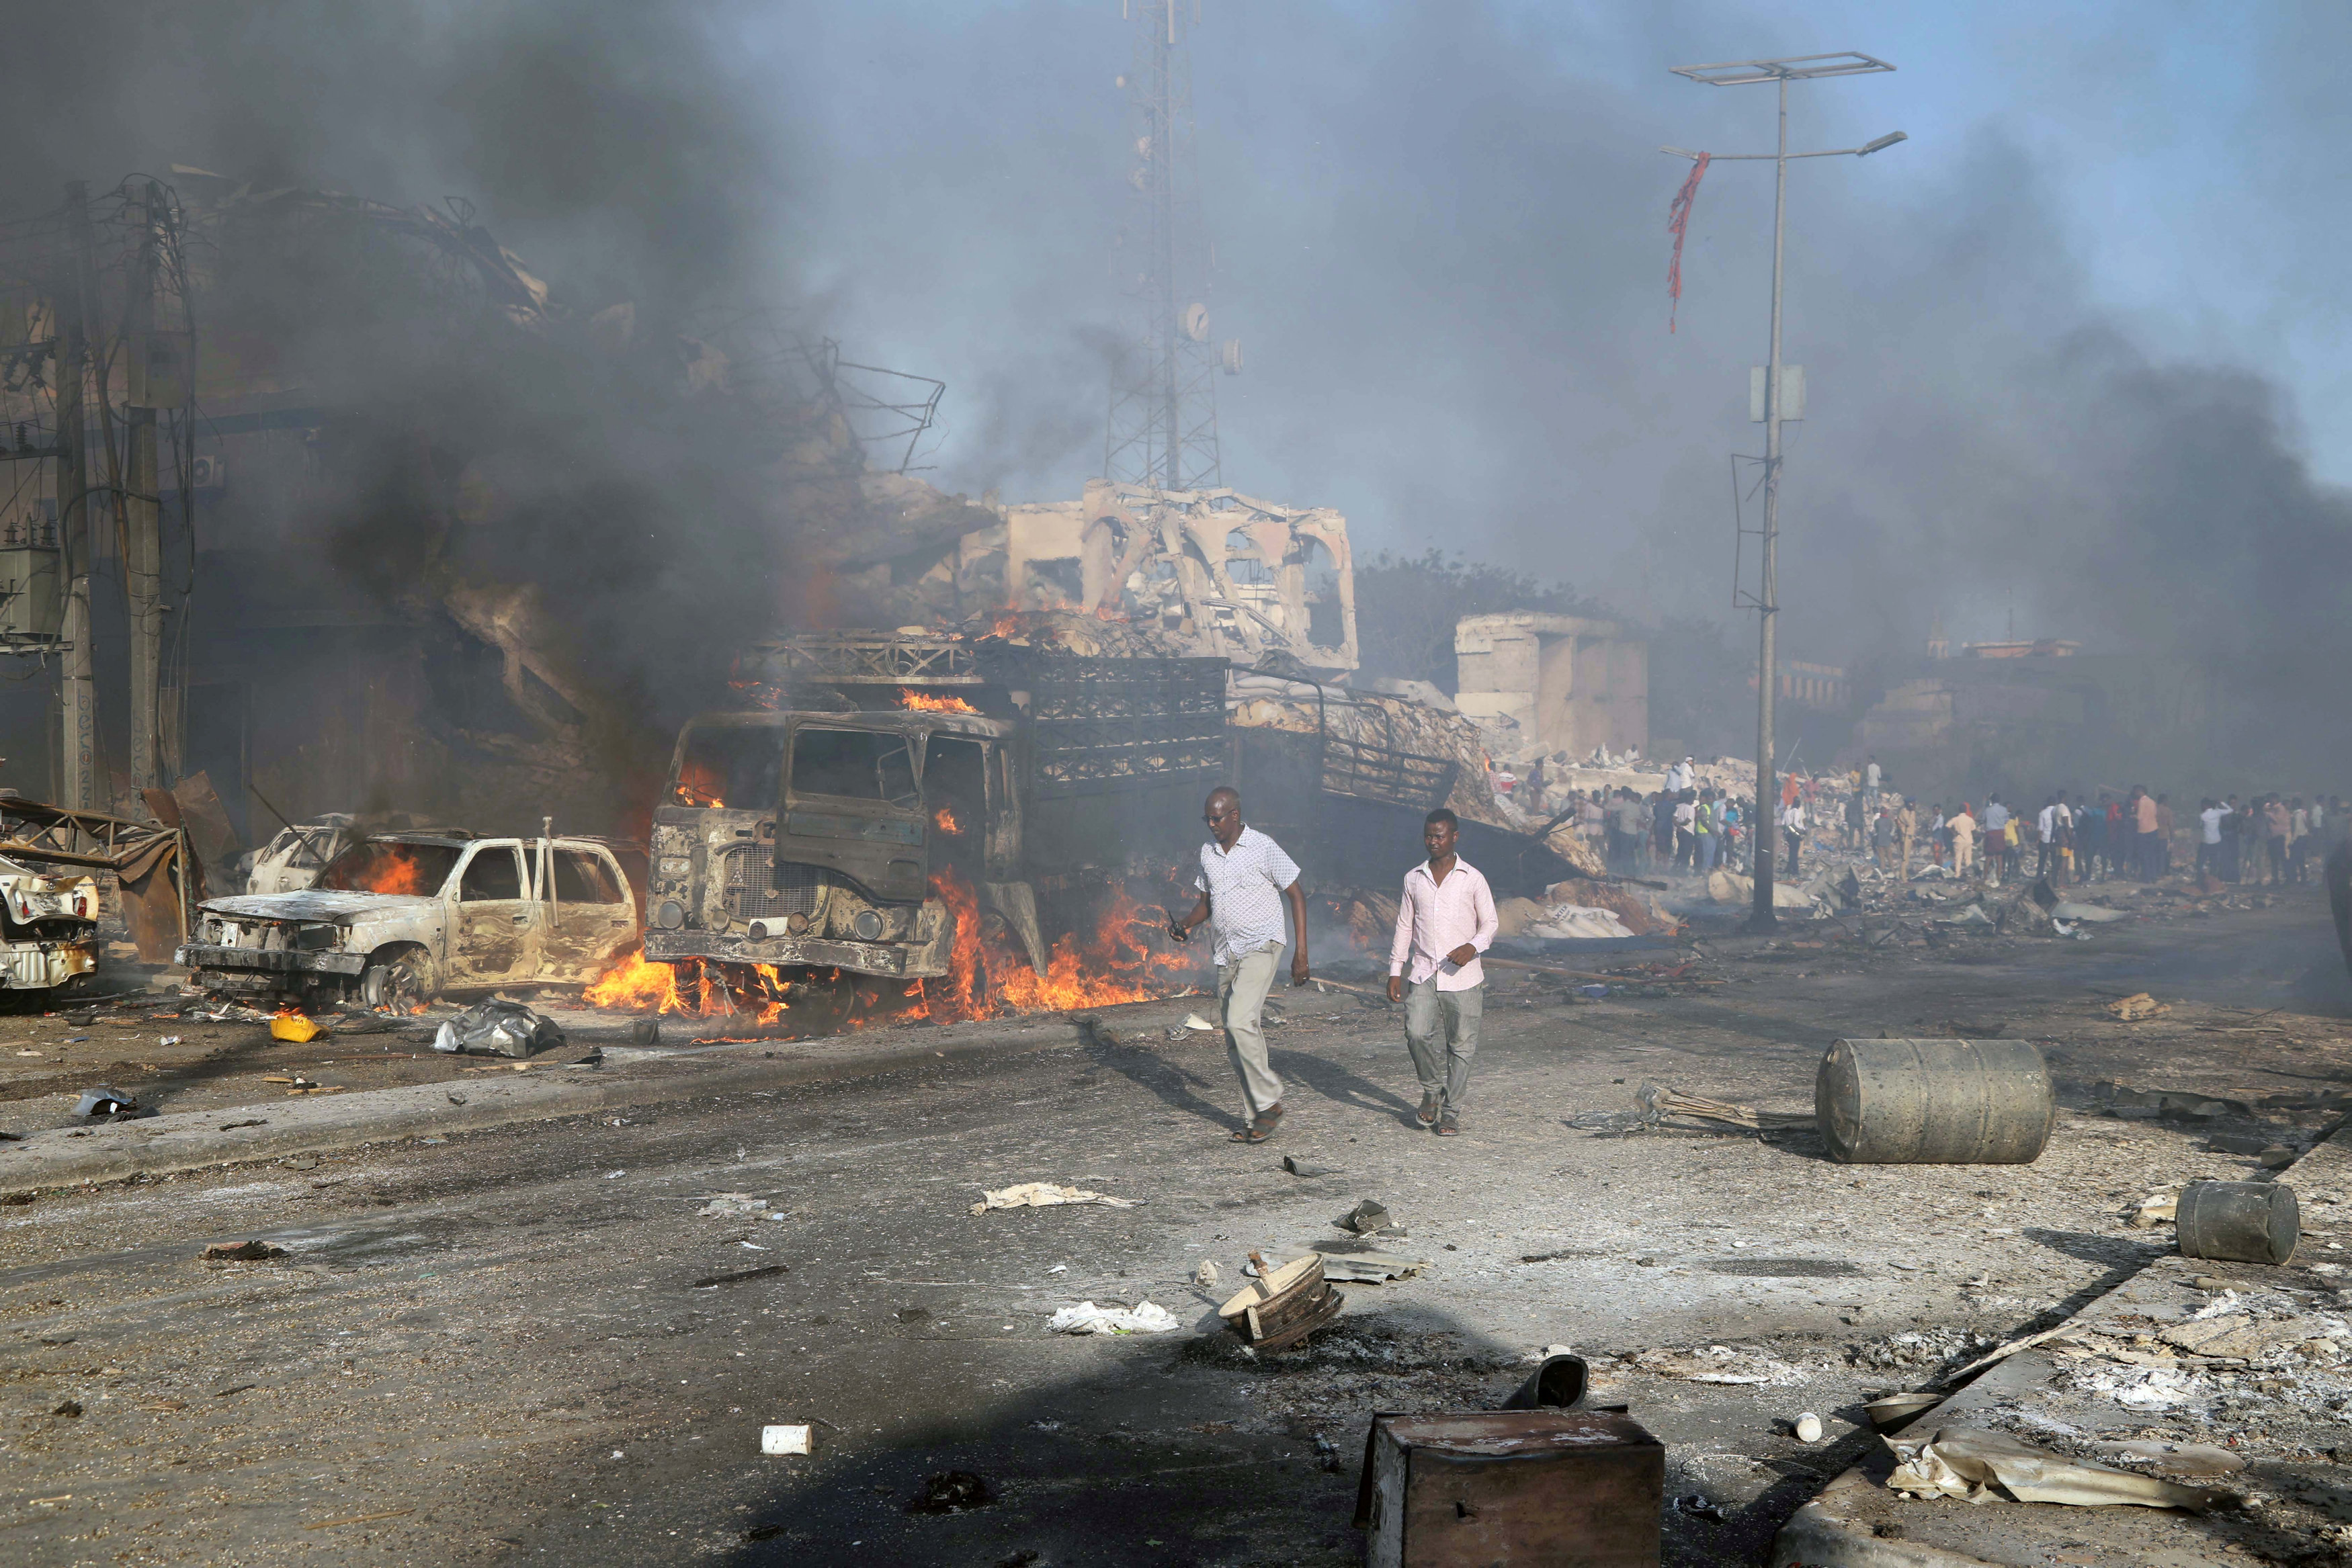 In pictures: Bomb attacks in Mogadishu